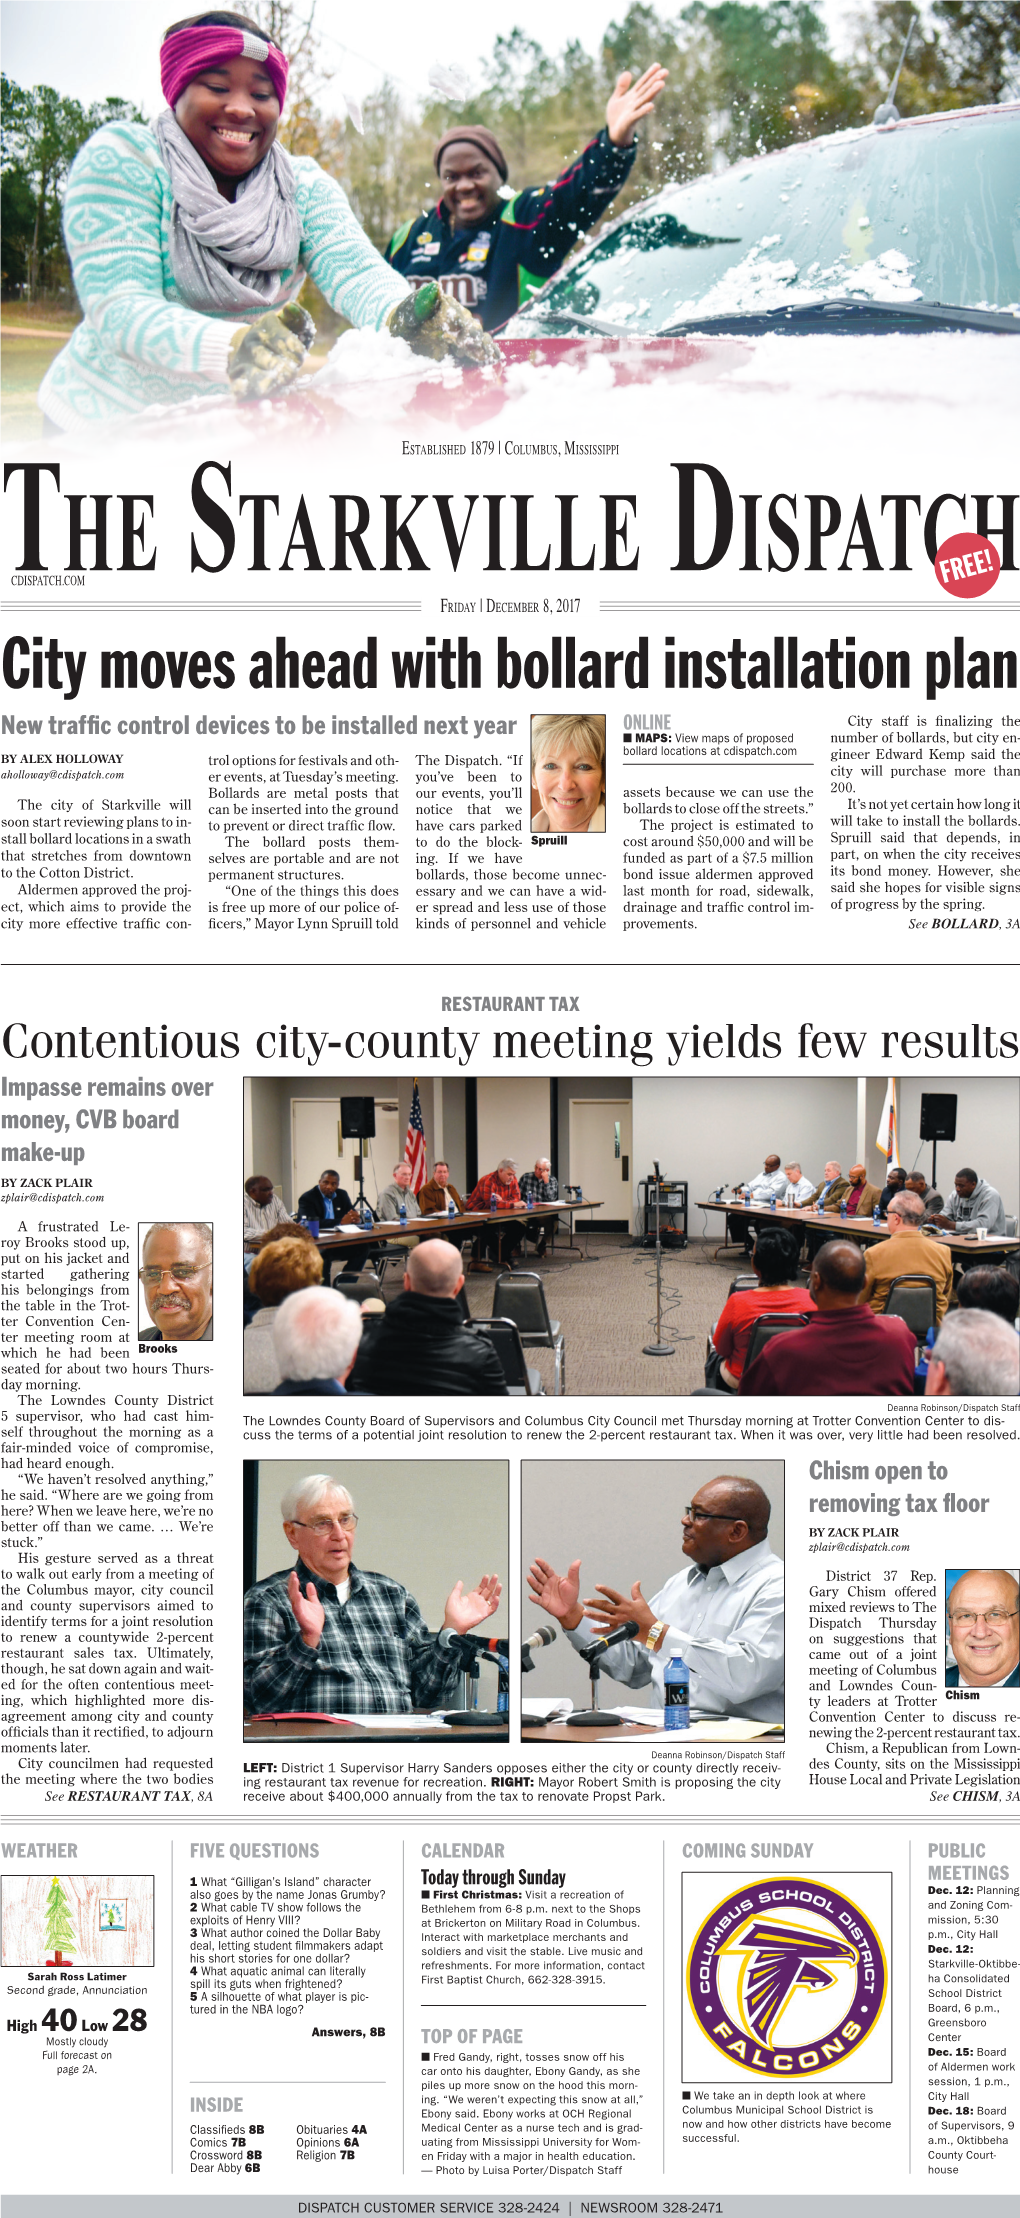 City Moves Ahead with Bollard Installation Plan